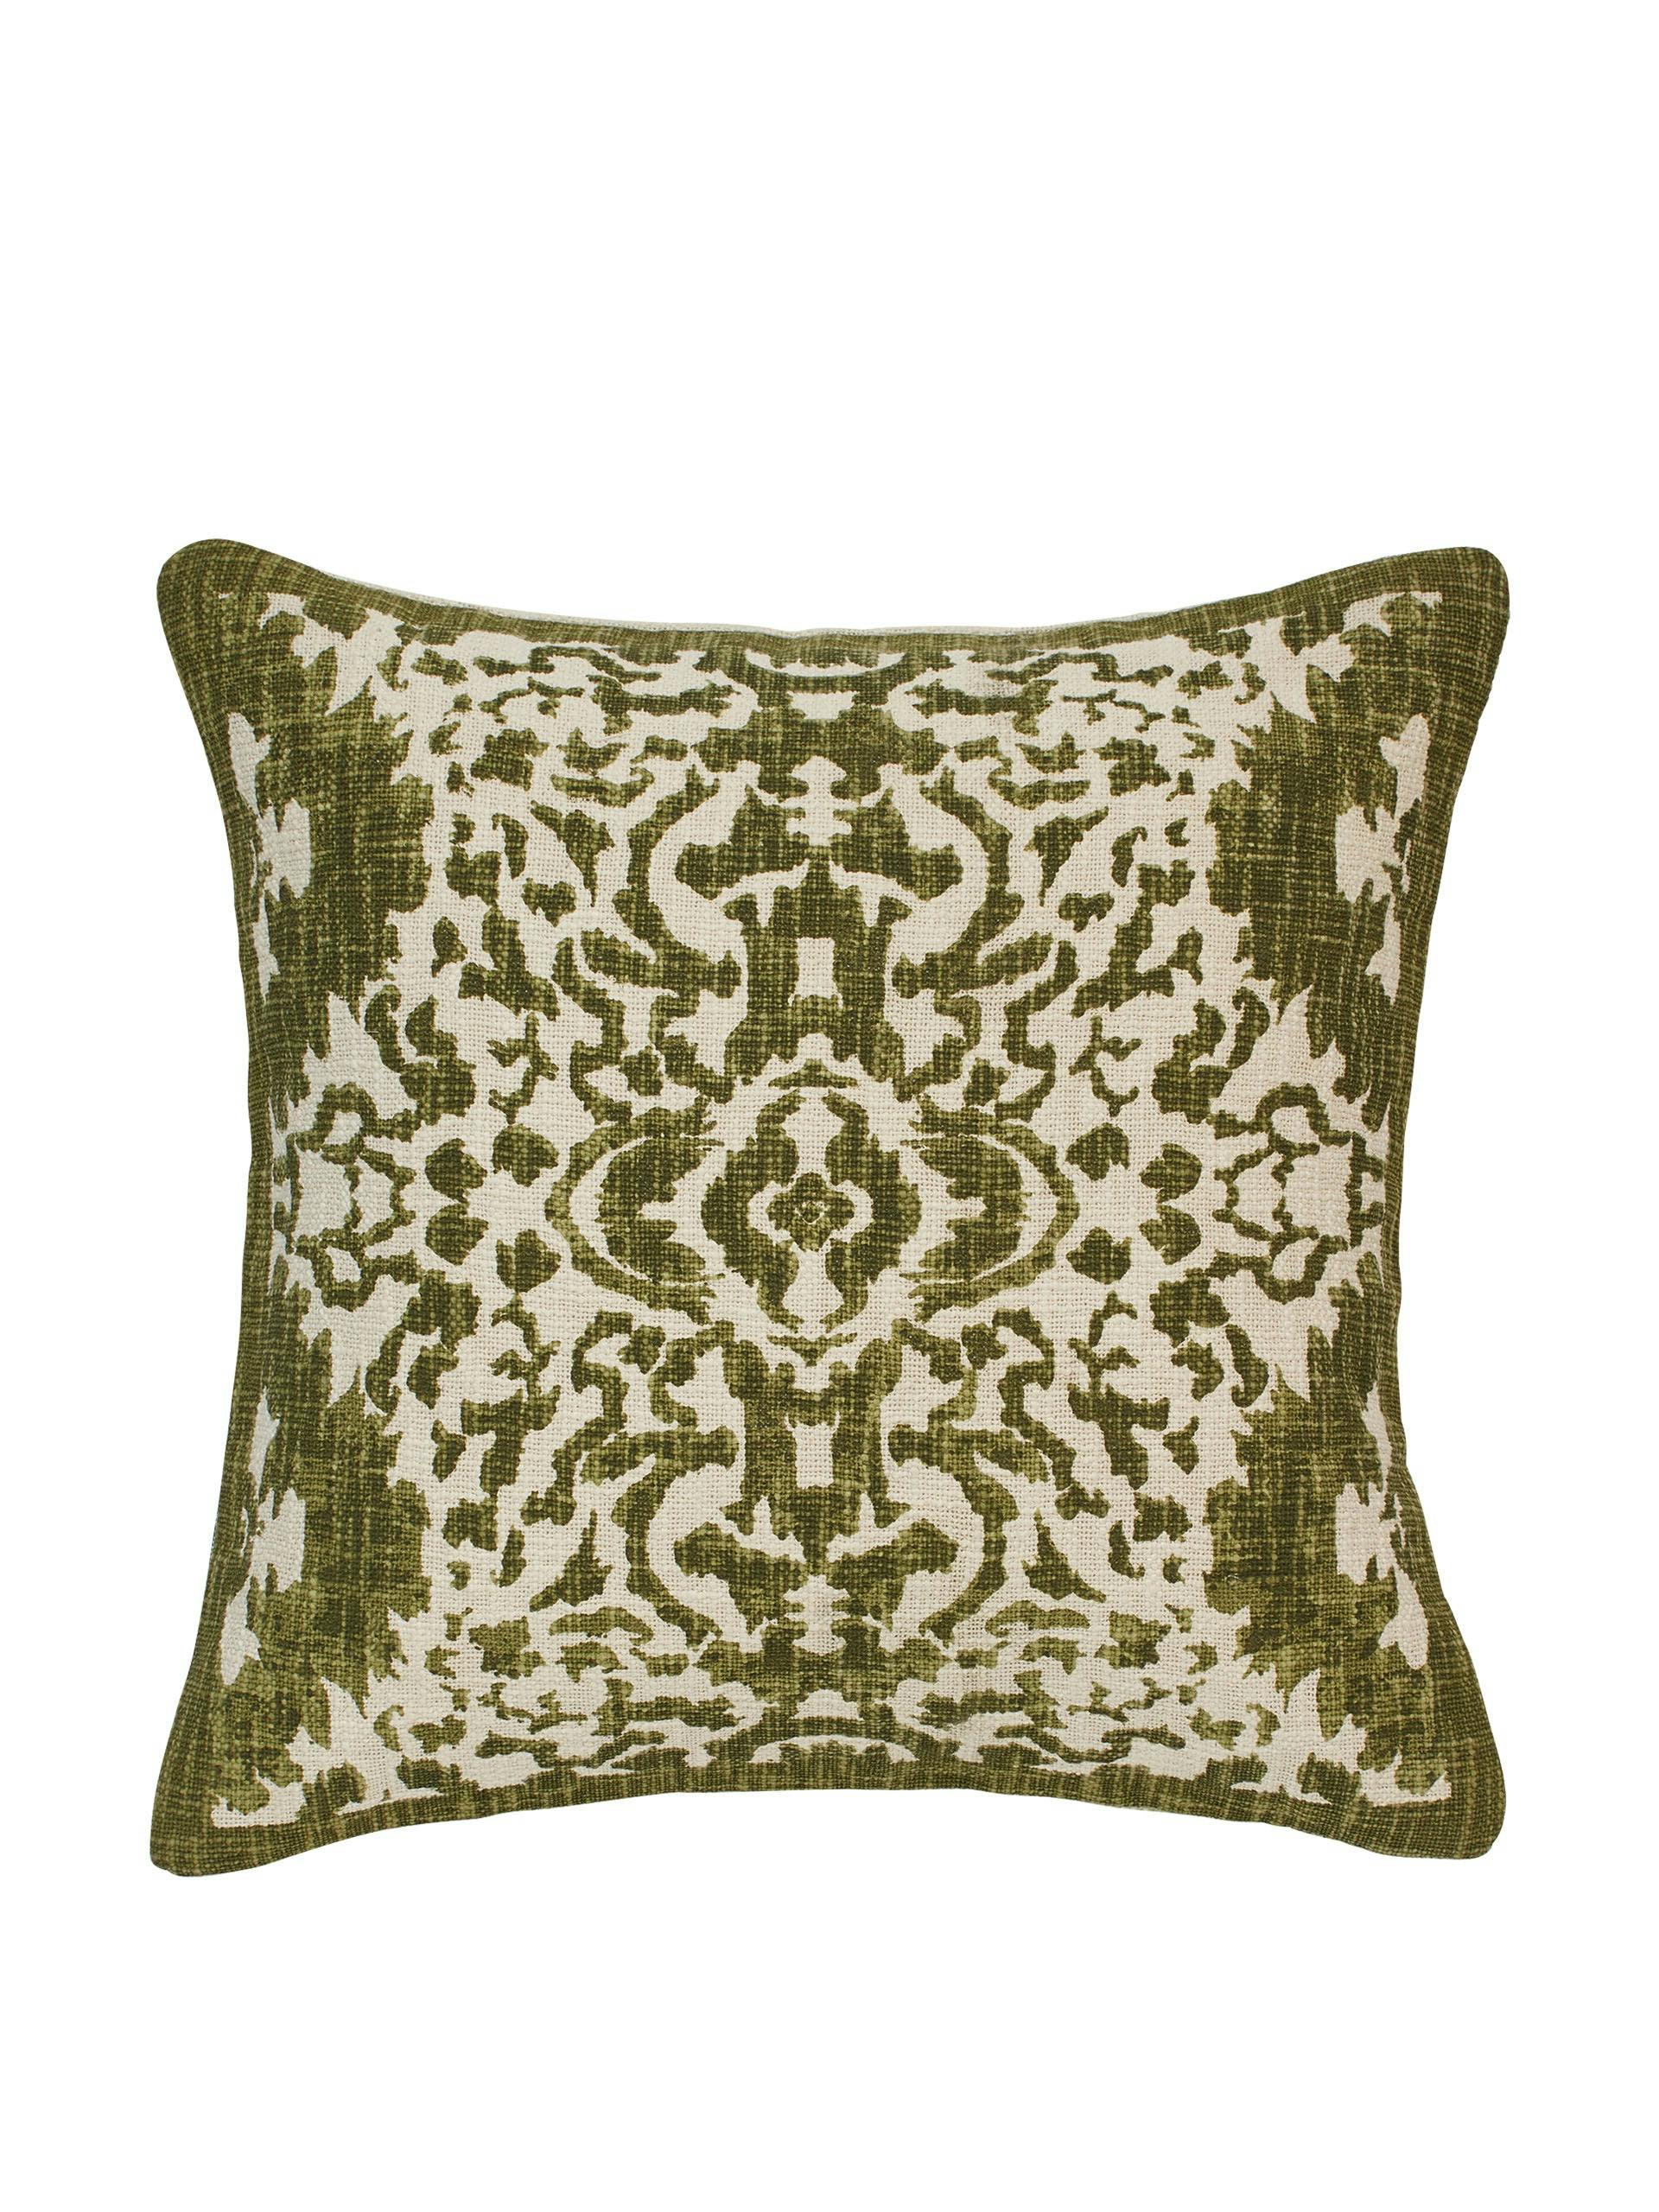 Moss Green cushion cover